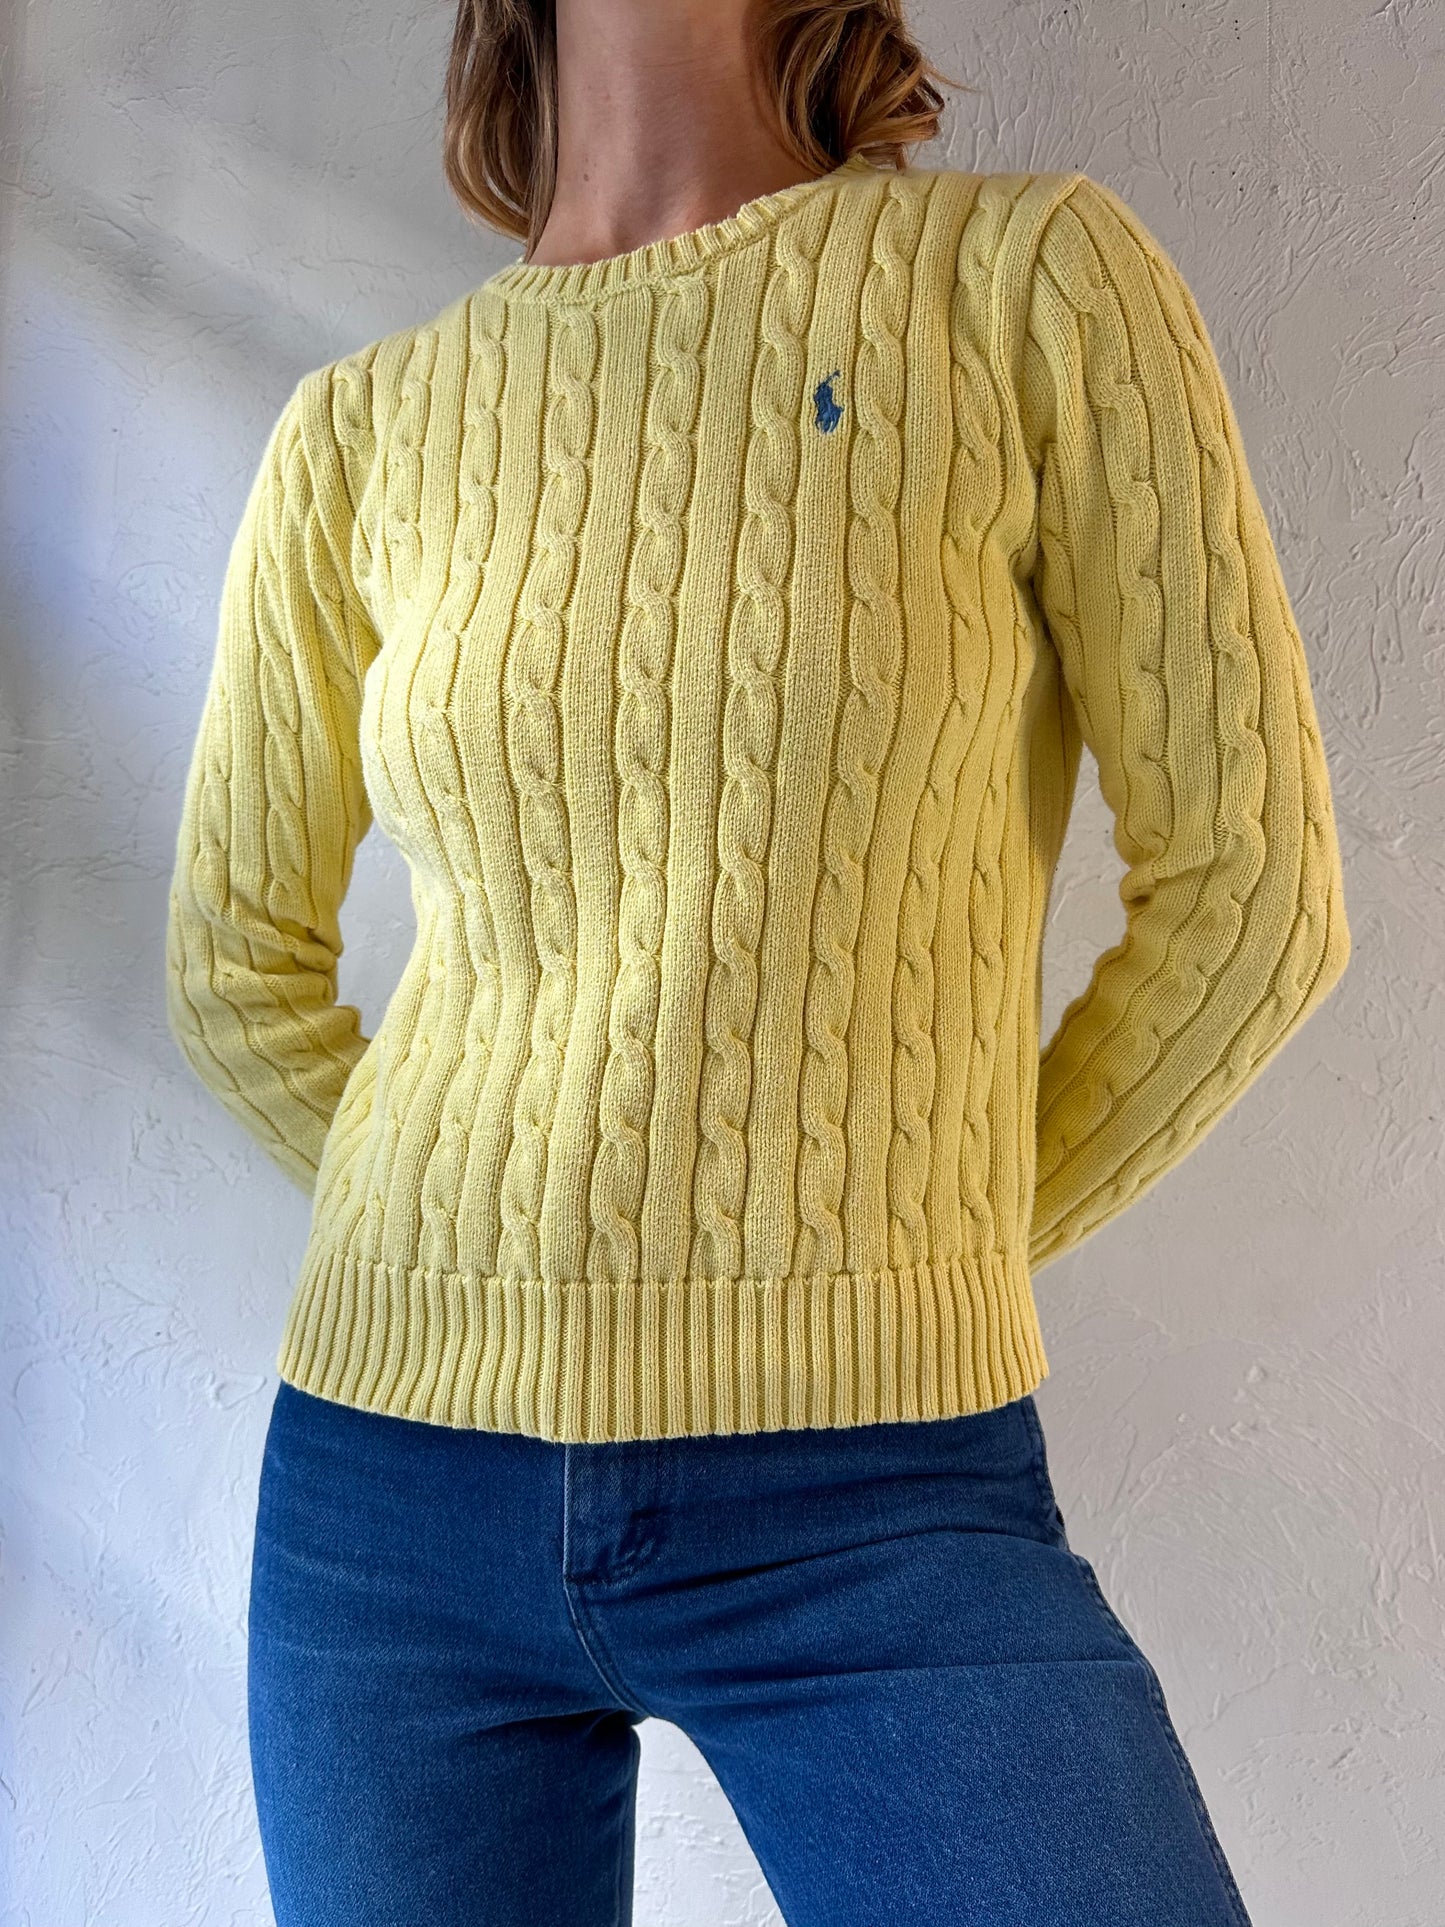 Y2k 'Ralph Lauren' Yellow Cable Knit Sweater / Medium